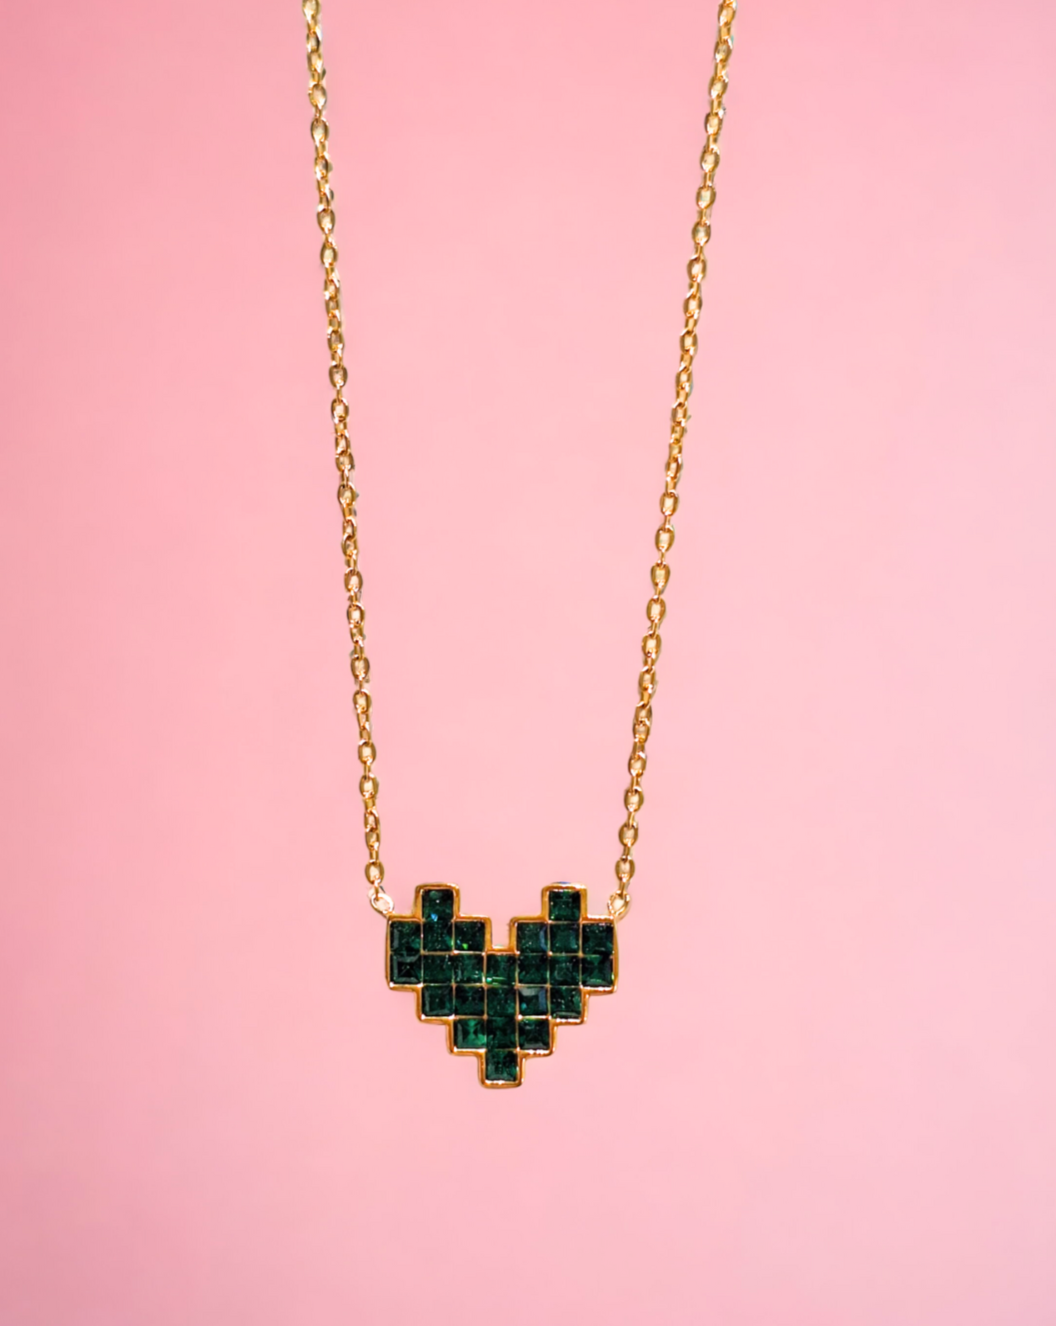 Verižica Pixel Heart Green/Gold